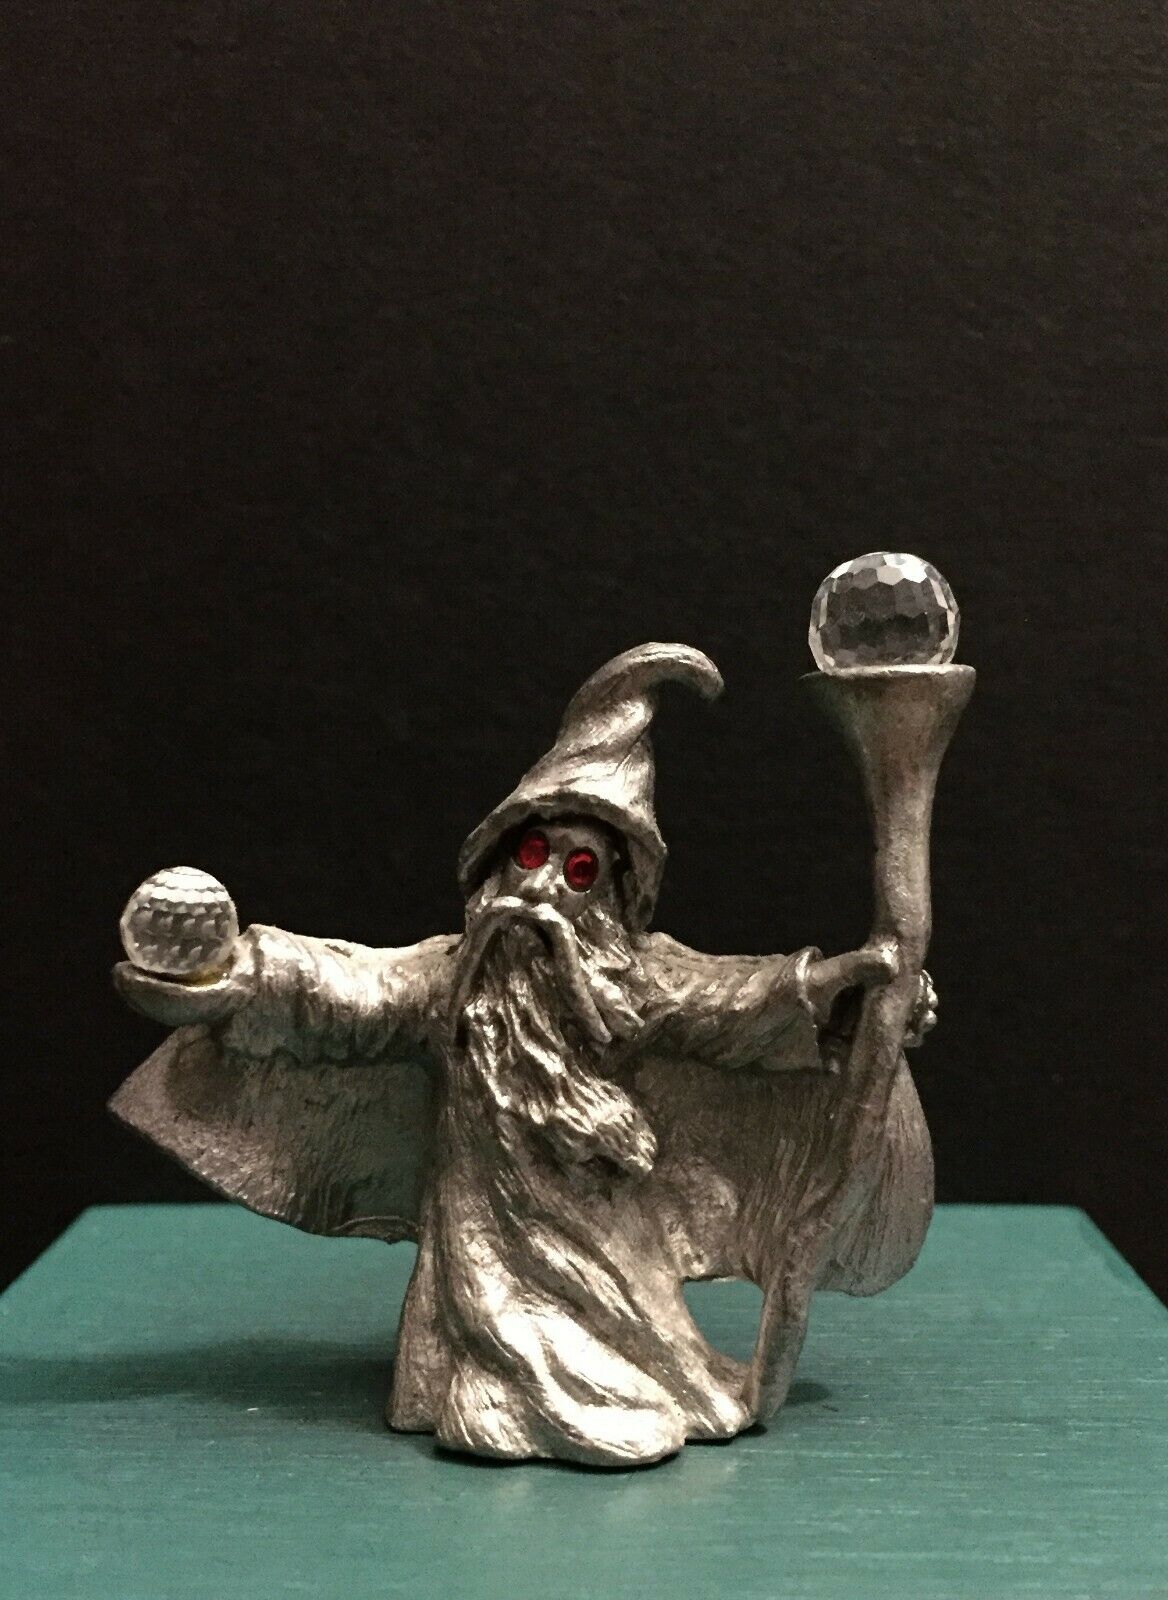 Spoontiques Pewter Metal Wizard Red Jewels Crystal Balls Miniature Art Figurine